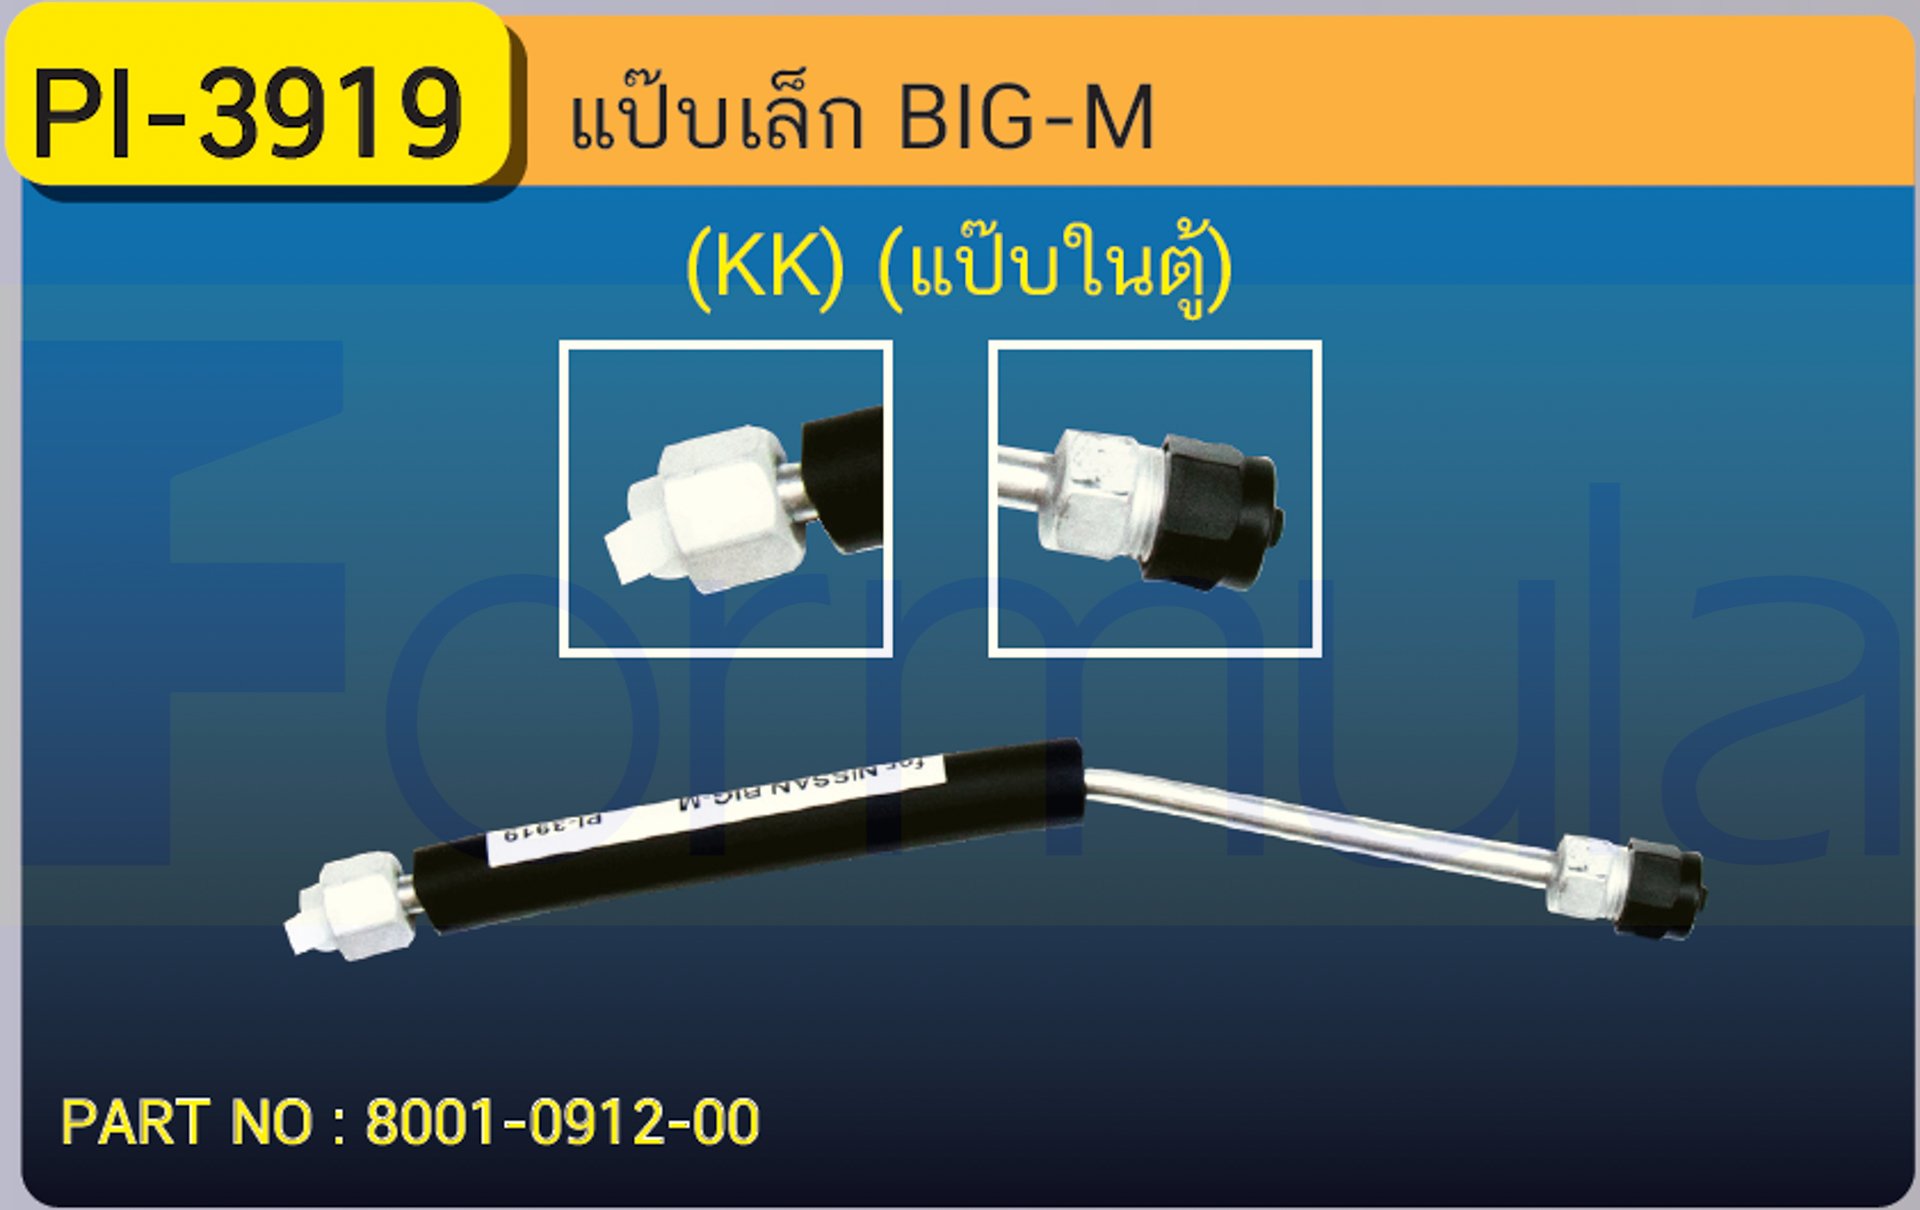 ALU. PIPE 8.0mm. NISSAN BIG-M (KK)(แป๊ปในตู้)